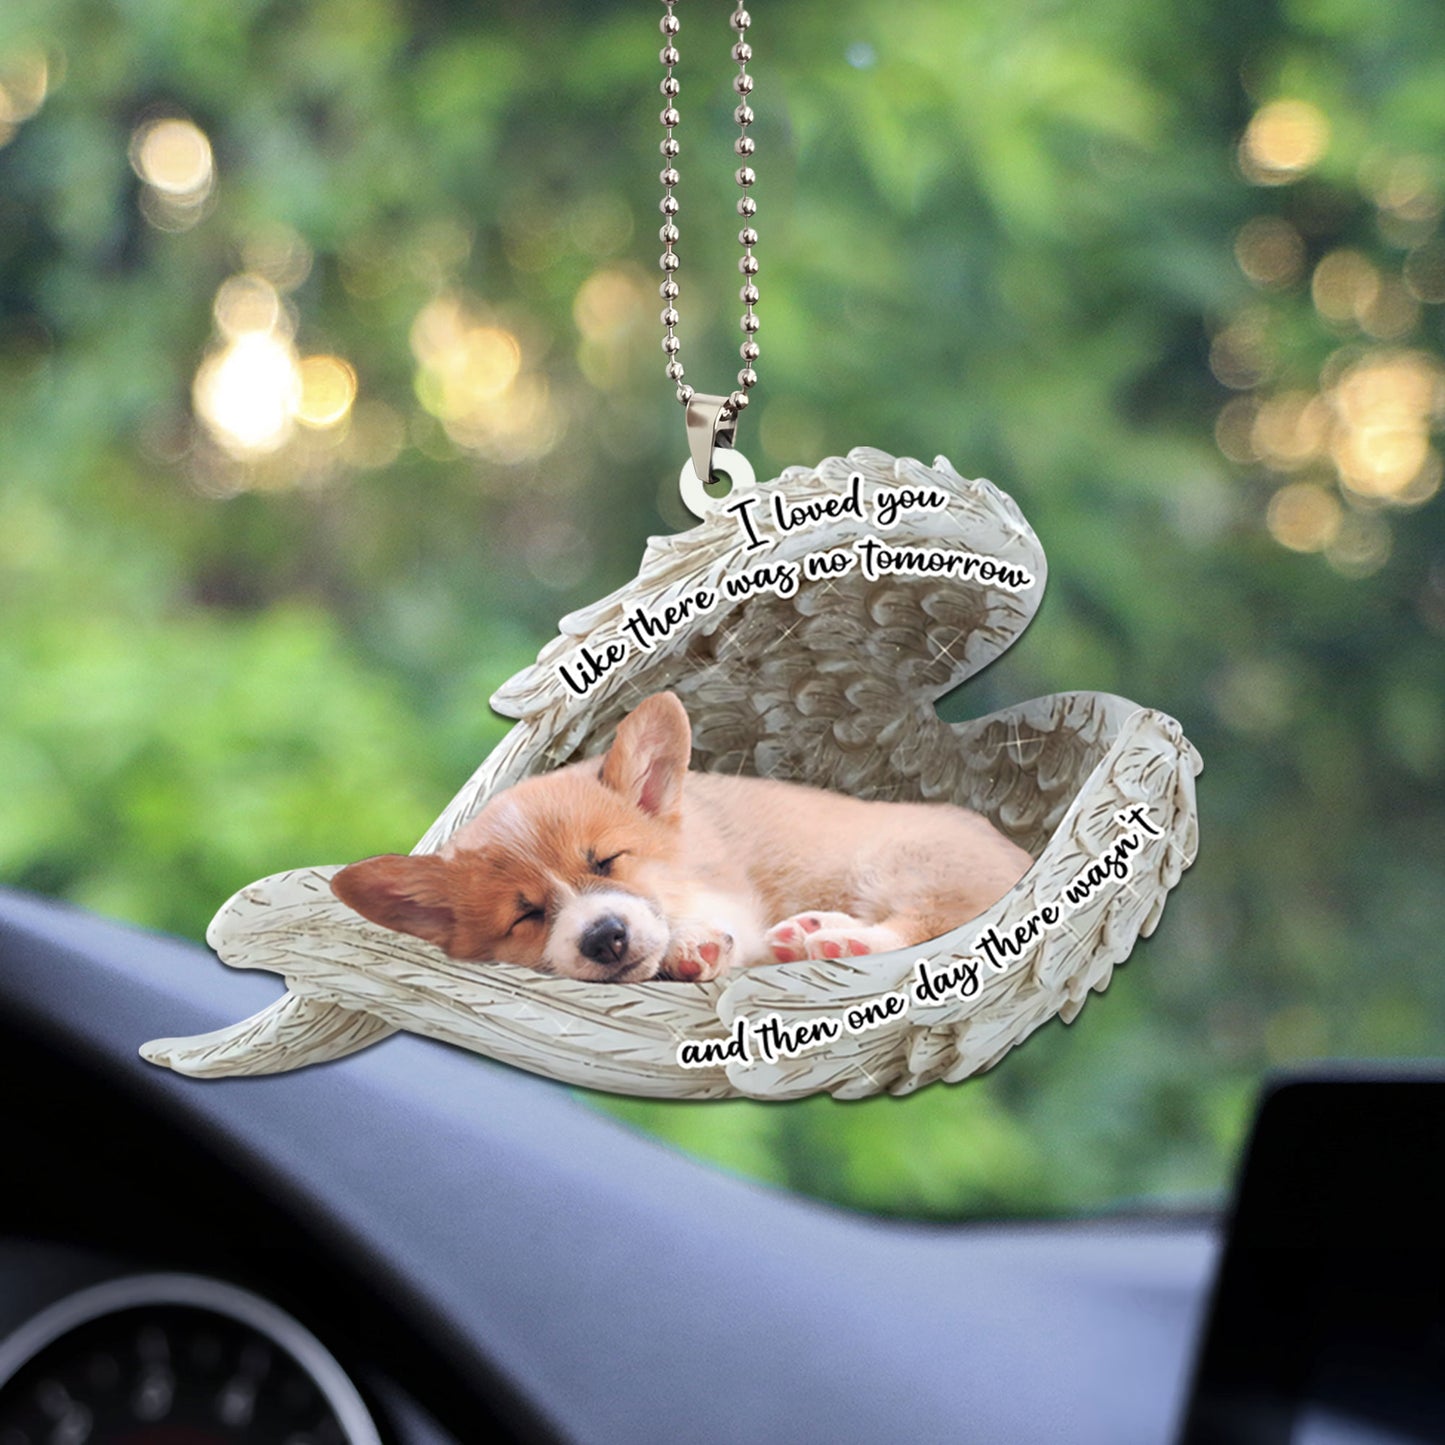 Cardigan Welsh Corgi Sleeping Angel Dog Personalizedwitch Flat Car Memorial Ornament